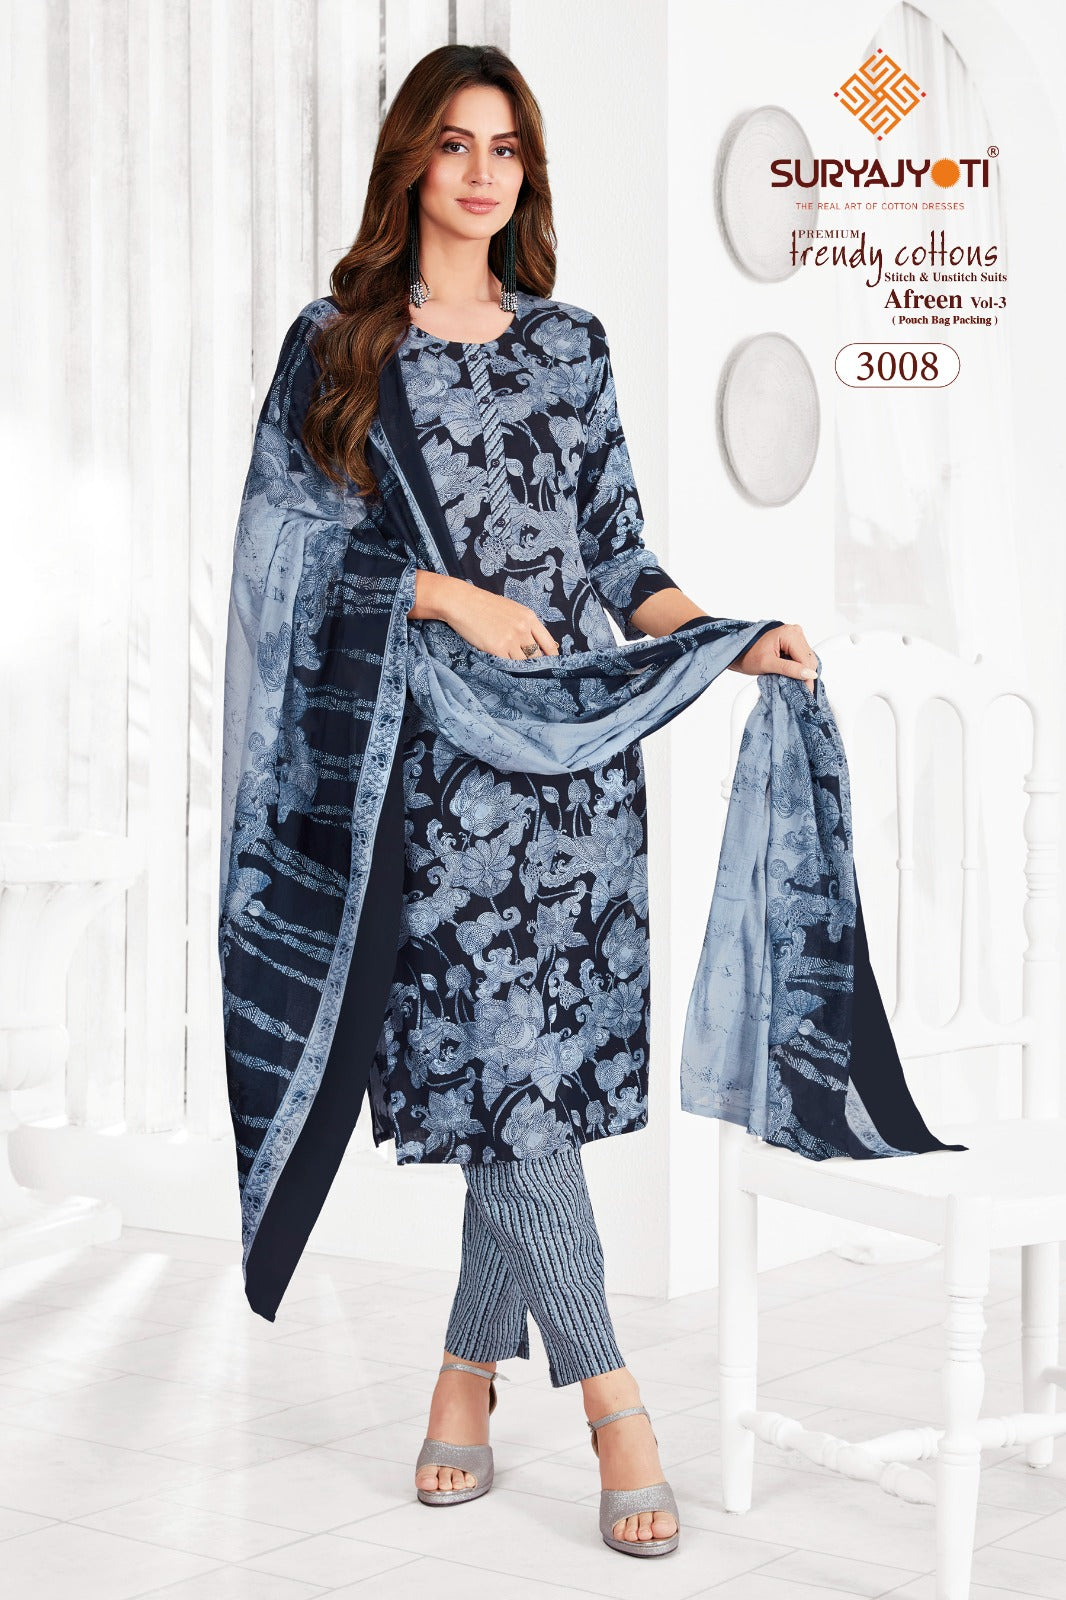 Afreen Vol 3 Suryajyoti Pure Cotton Cotton Dress Material Supplier Ahmedabad